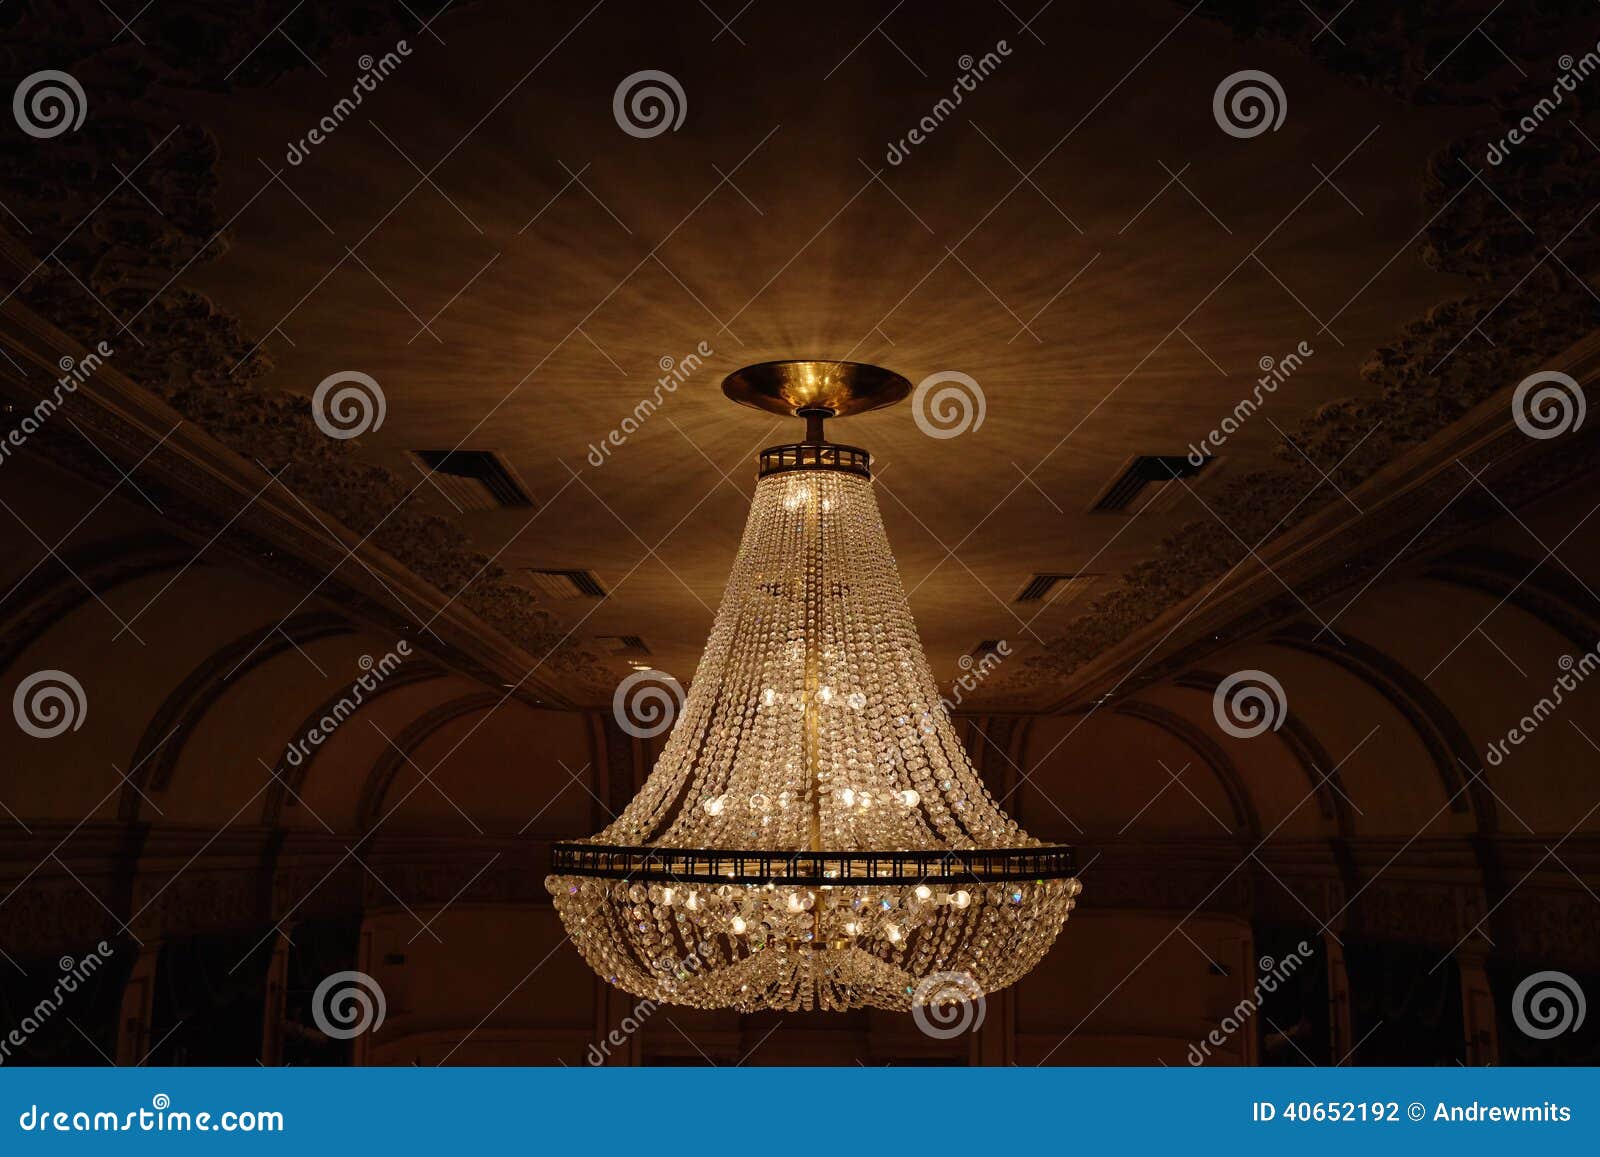 elegant chandeliers